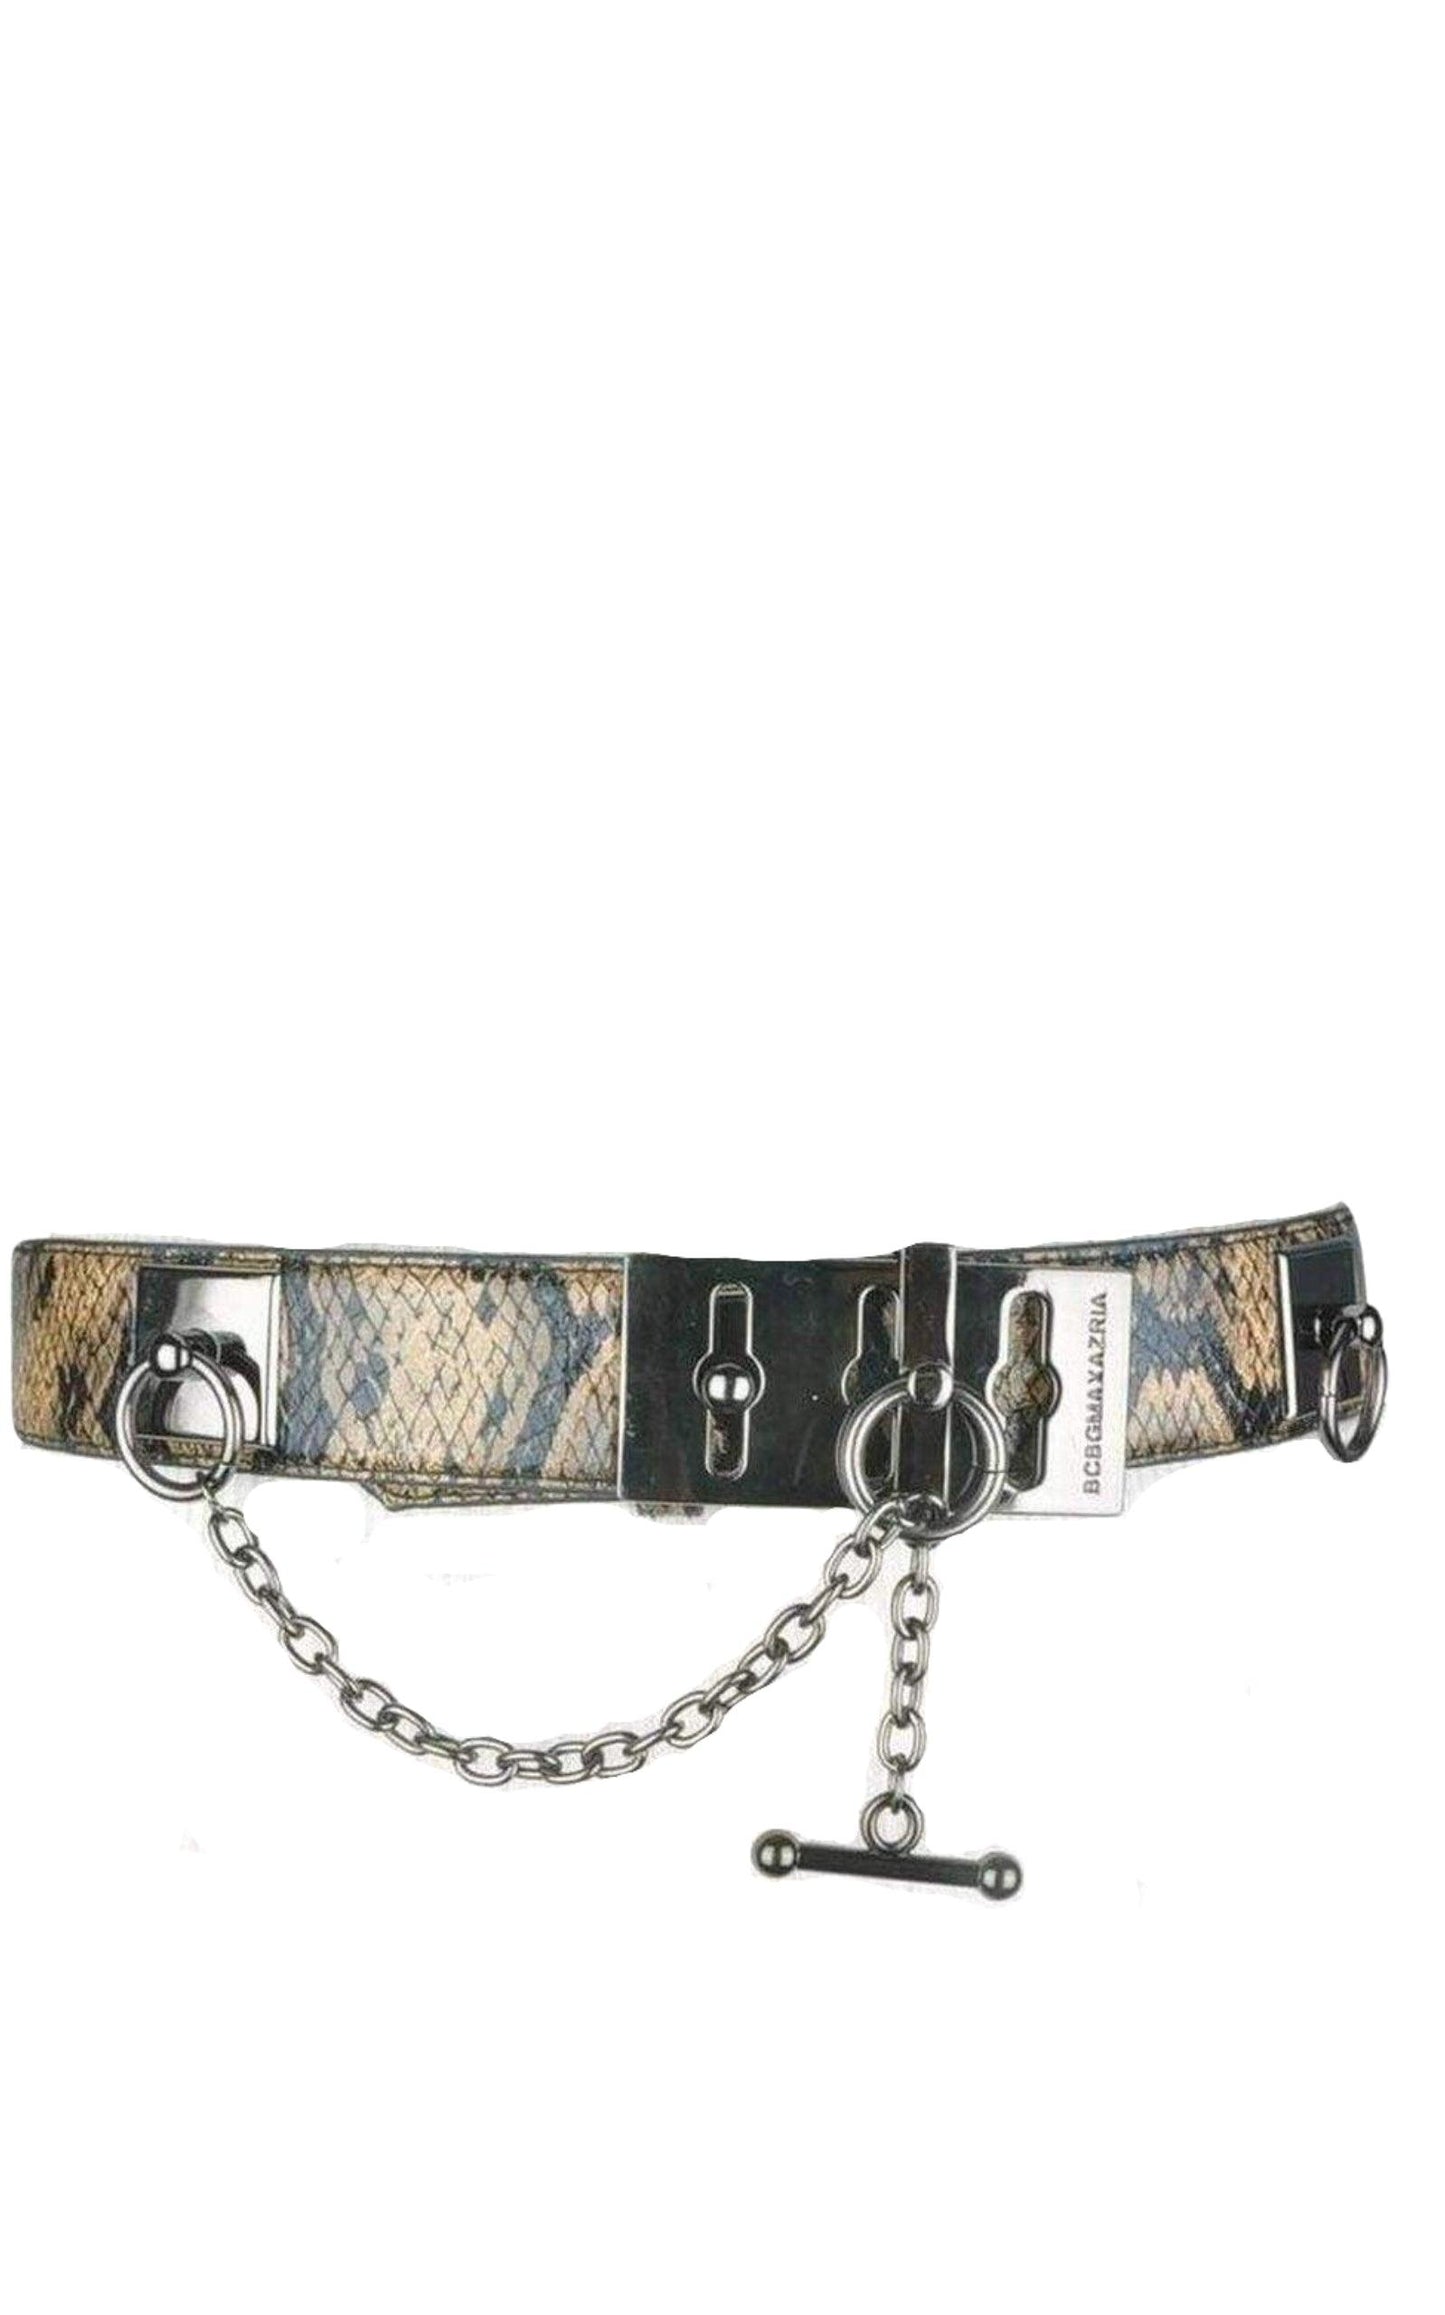  BCBGMAXAZRIAFaux Snake Leather Metallic Chain Toggle Belt - Runway Catalog